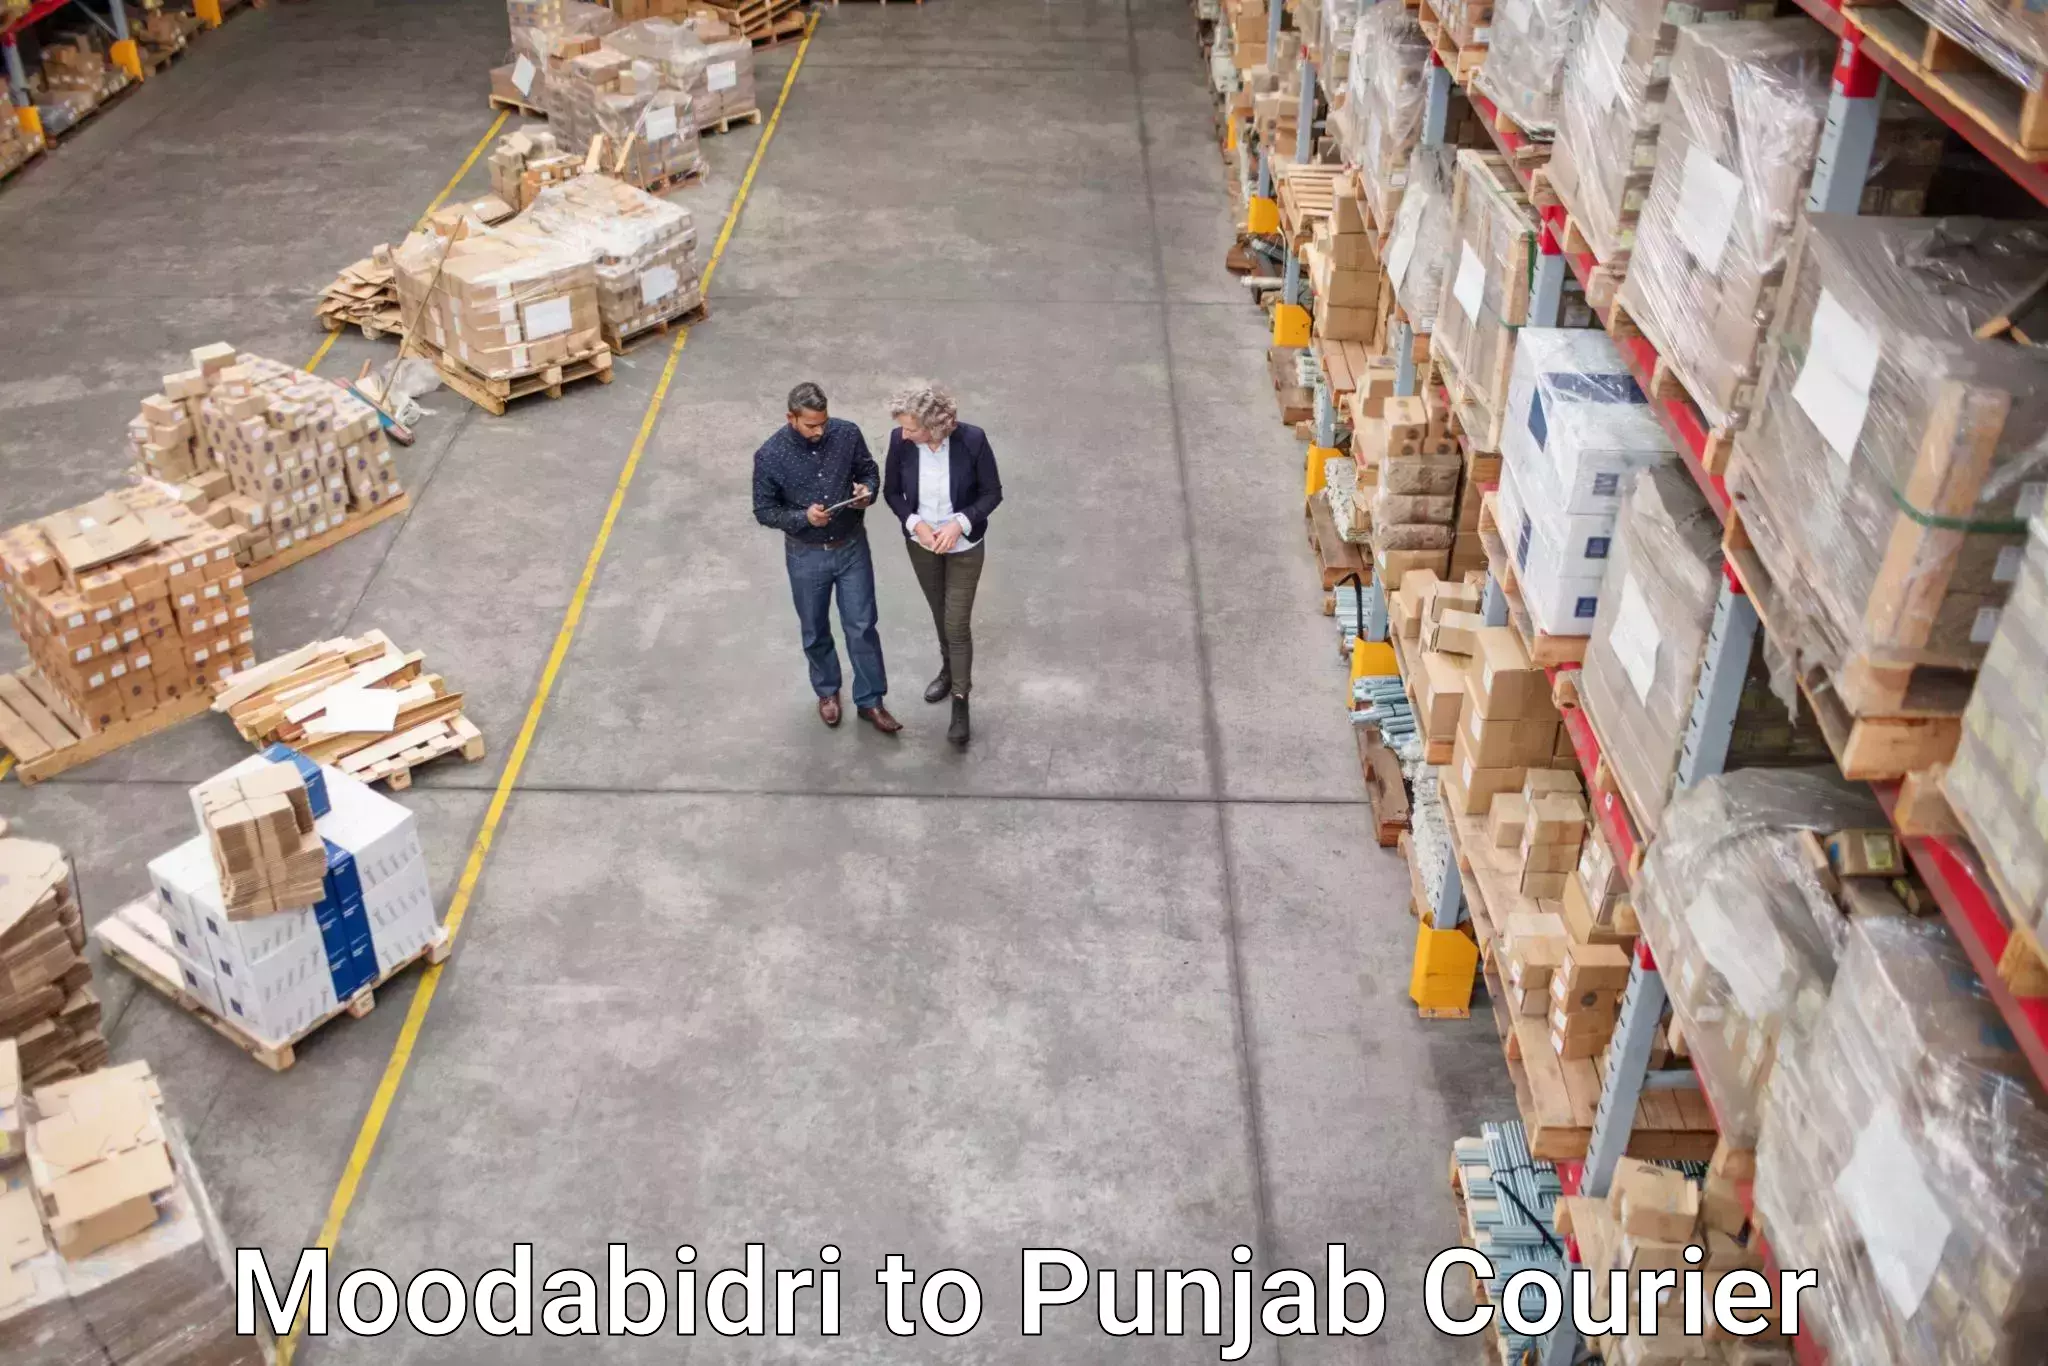 Bulk courier orders Moodabidri to Punjab